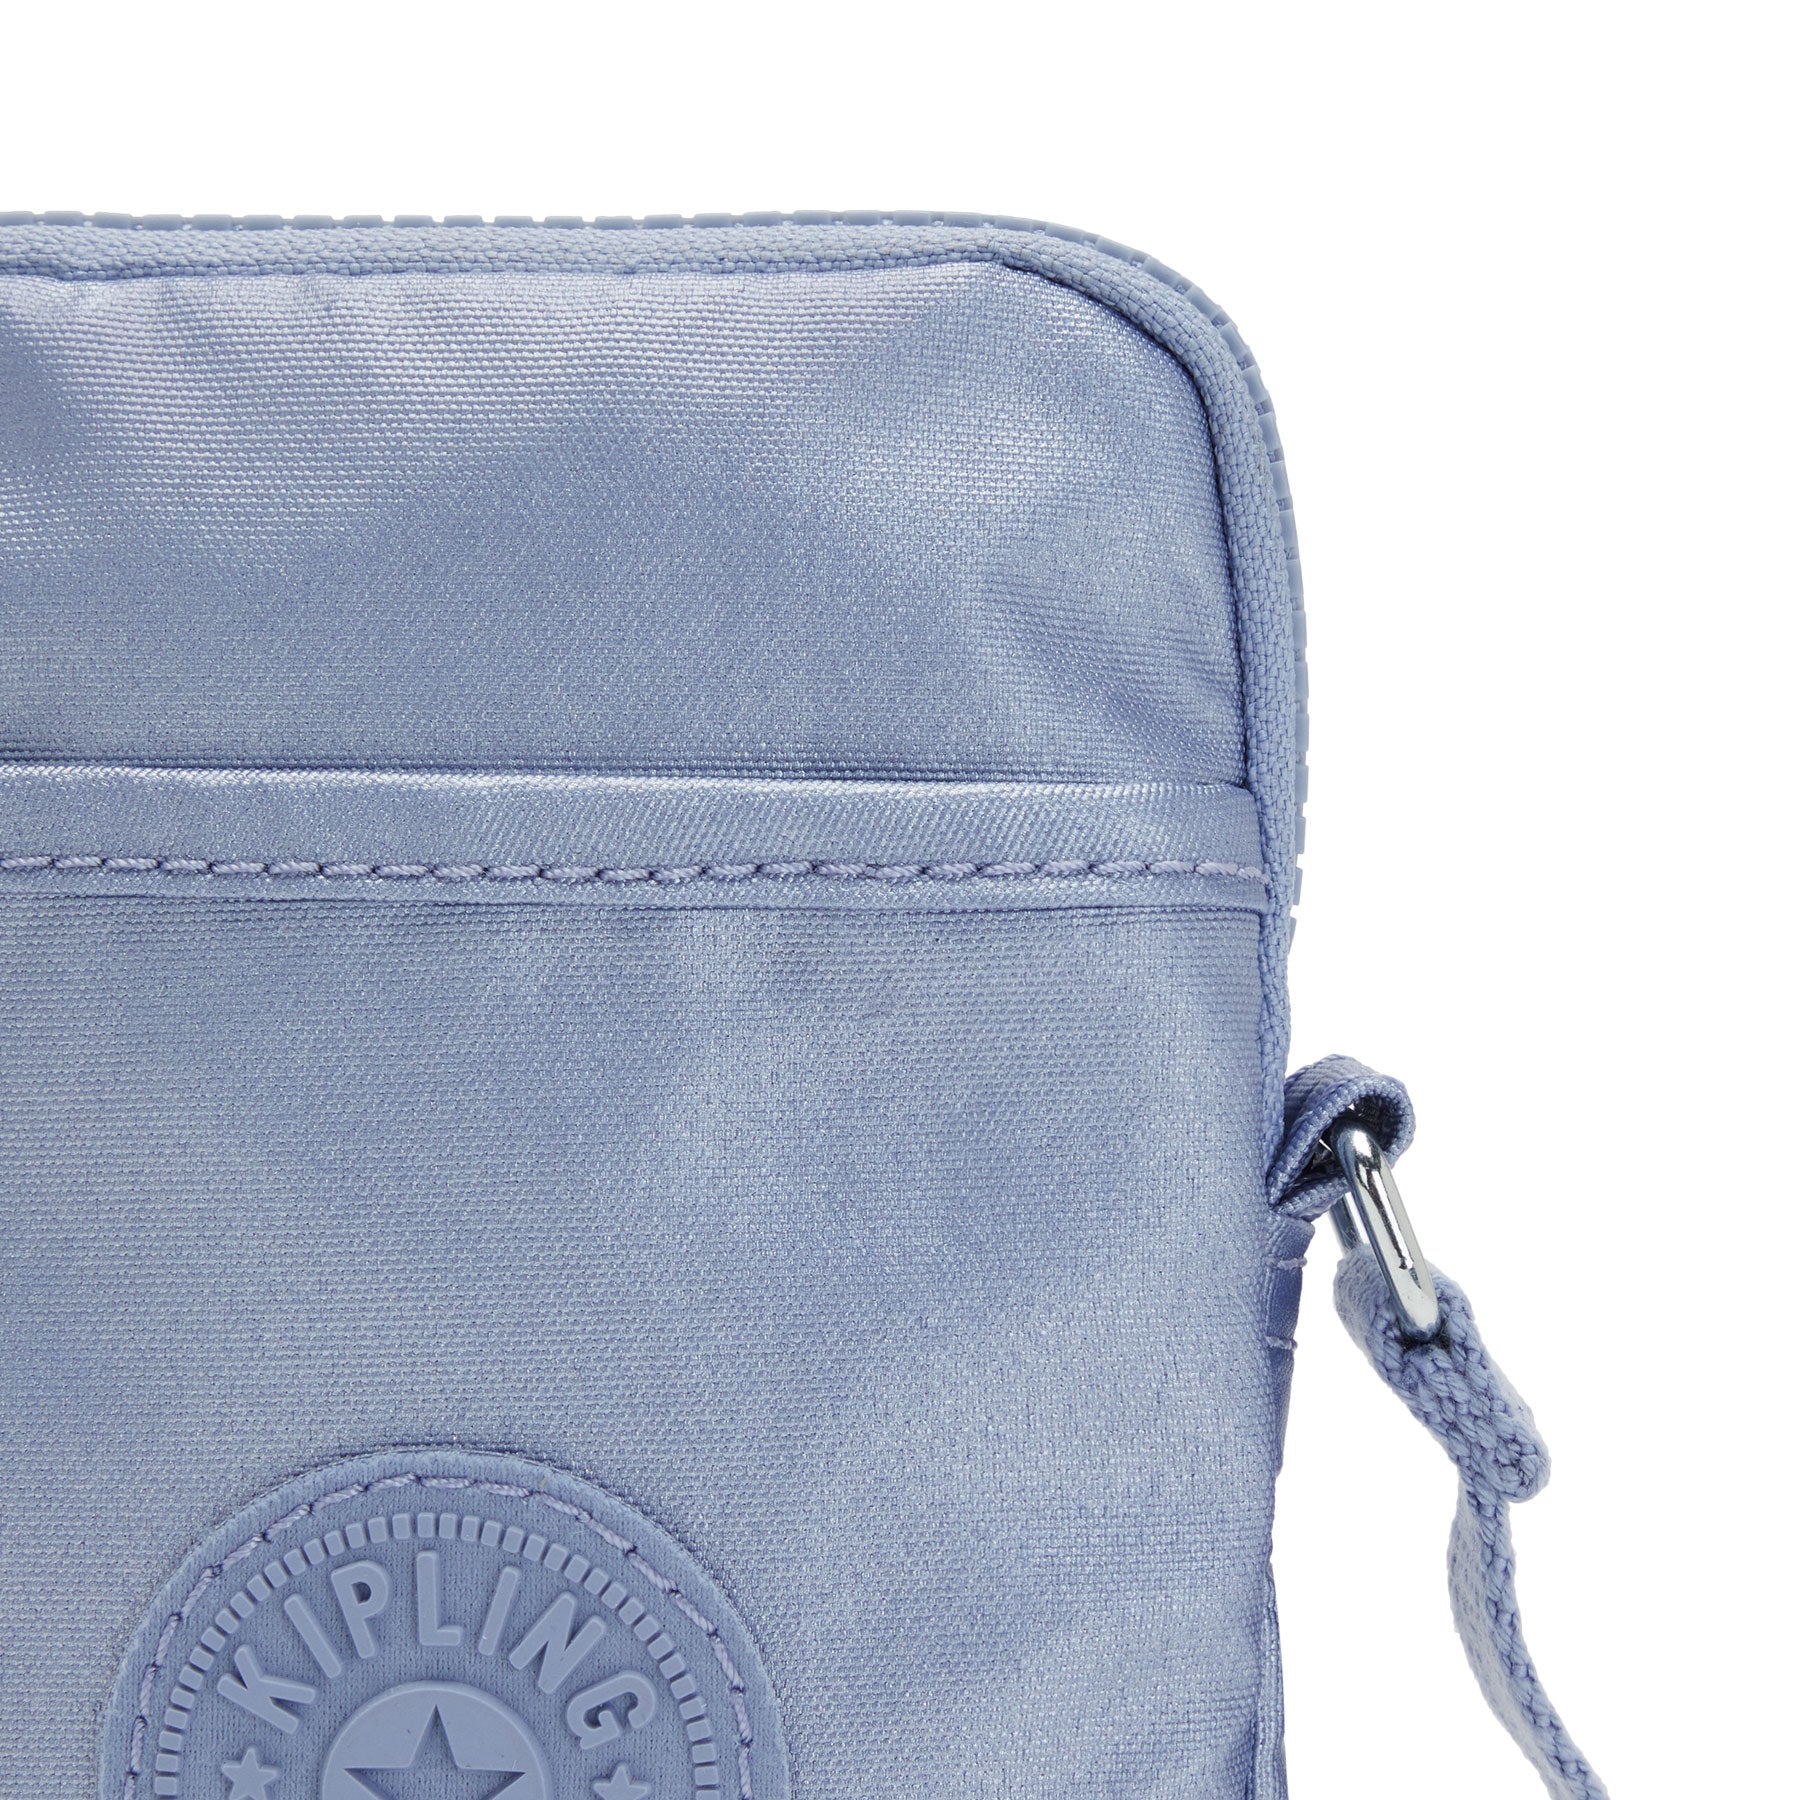 Kipling Tally Crossbody Phone Bag | Altman Luggage Sale